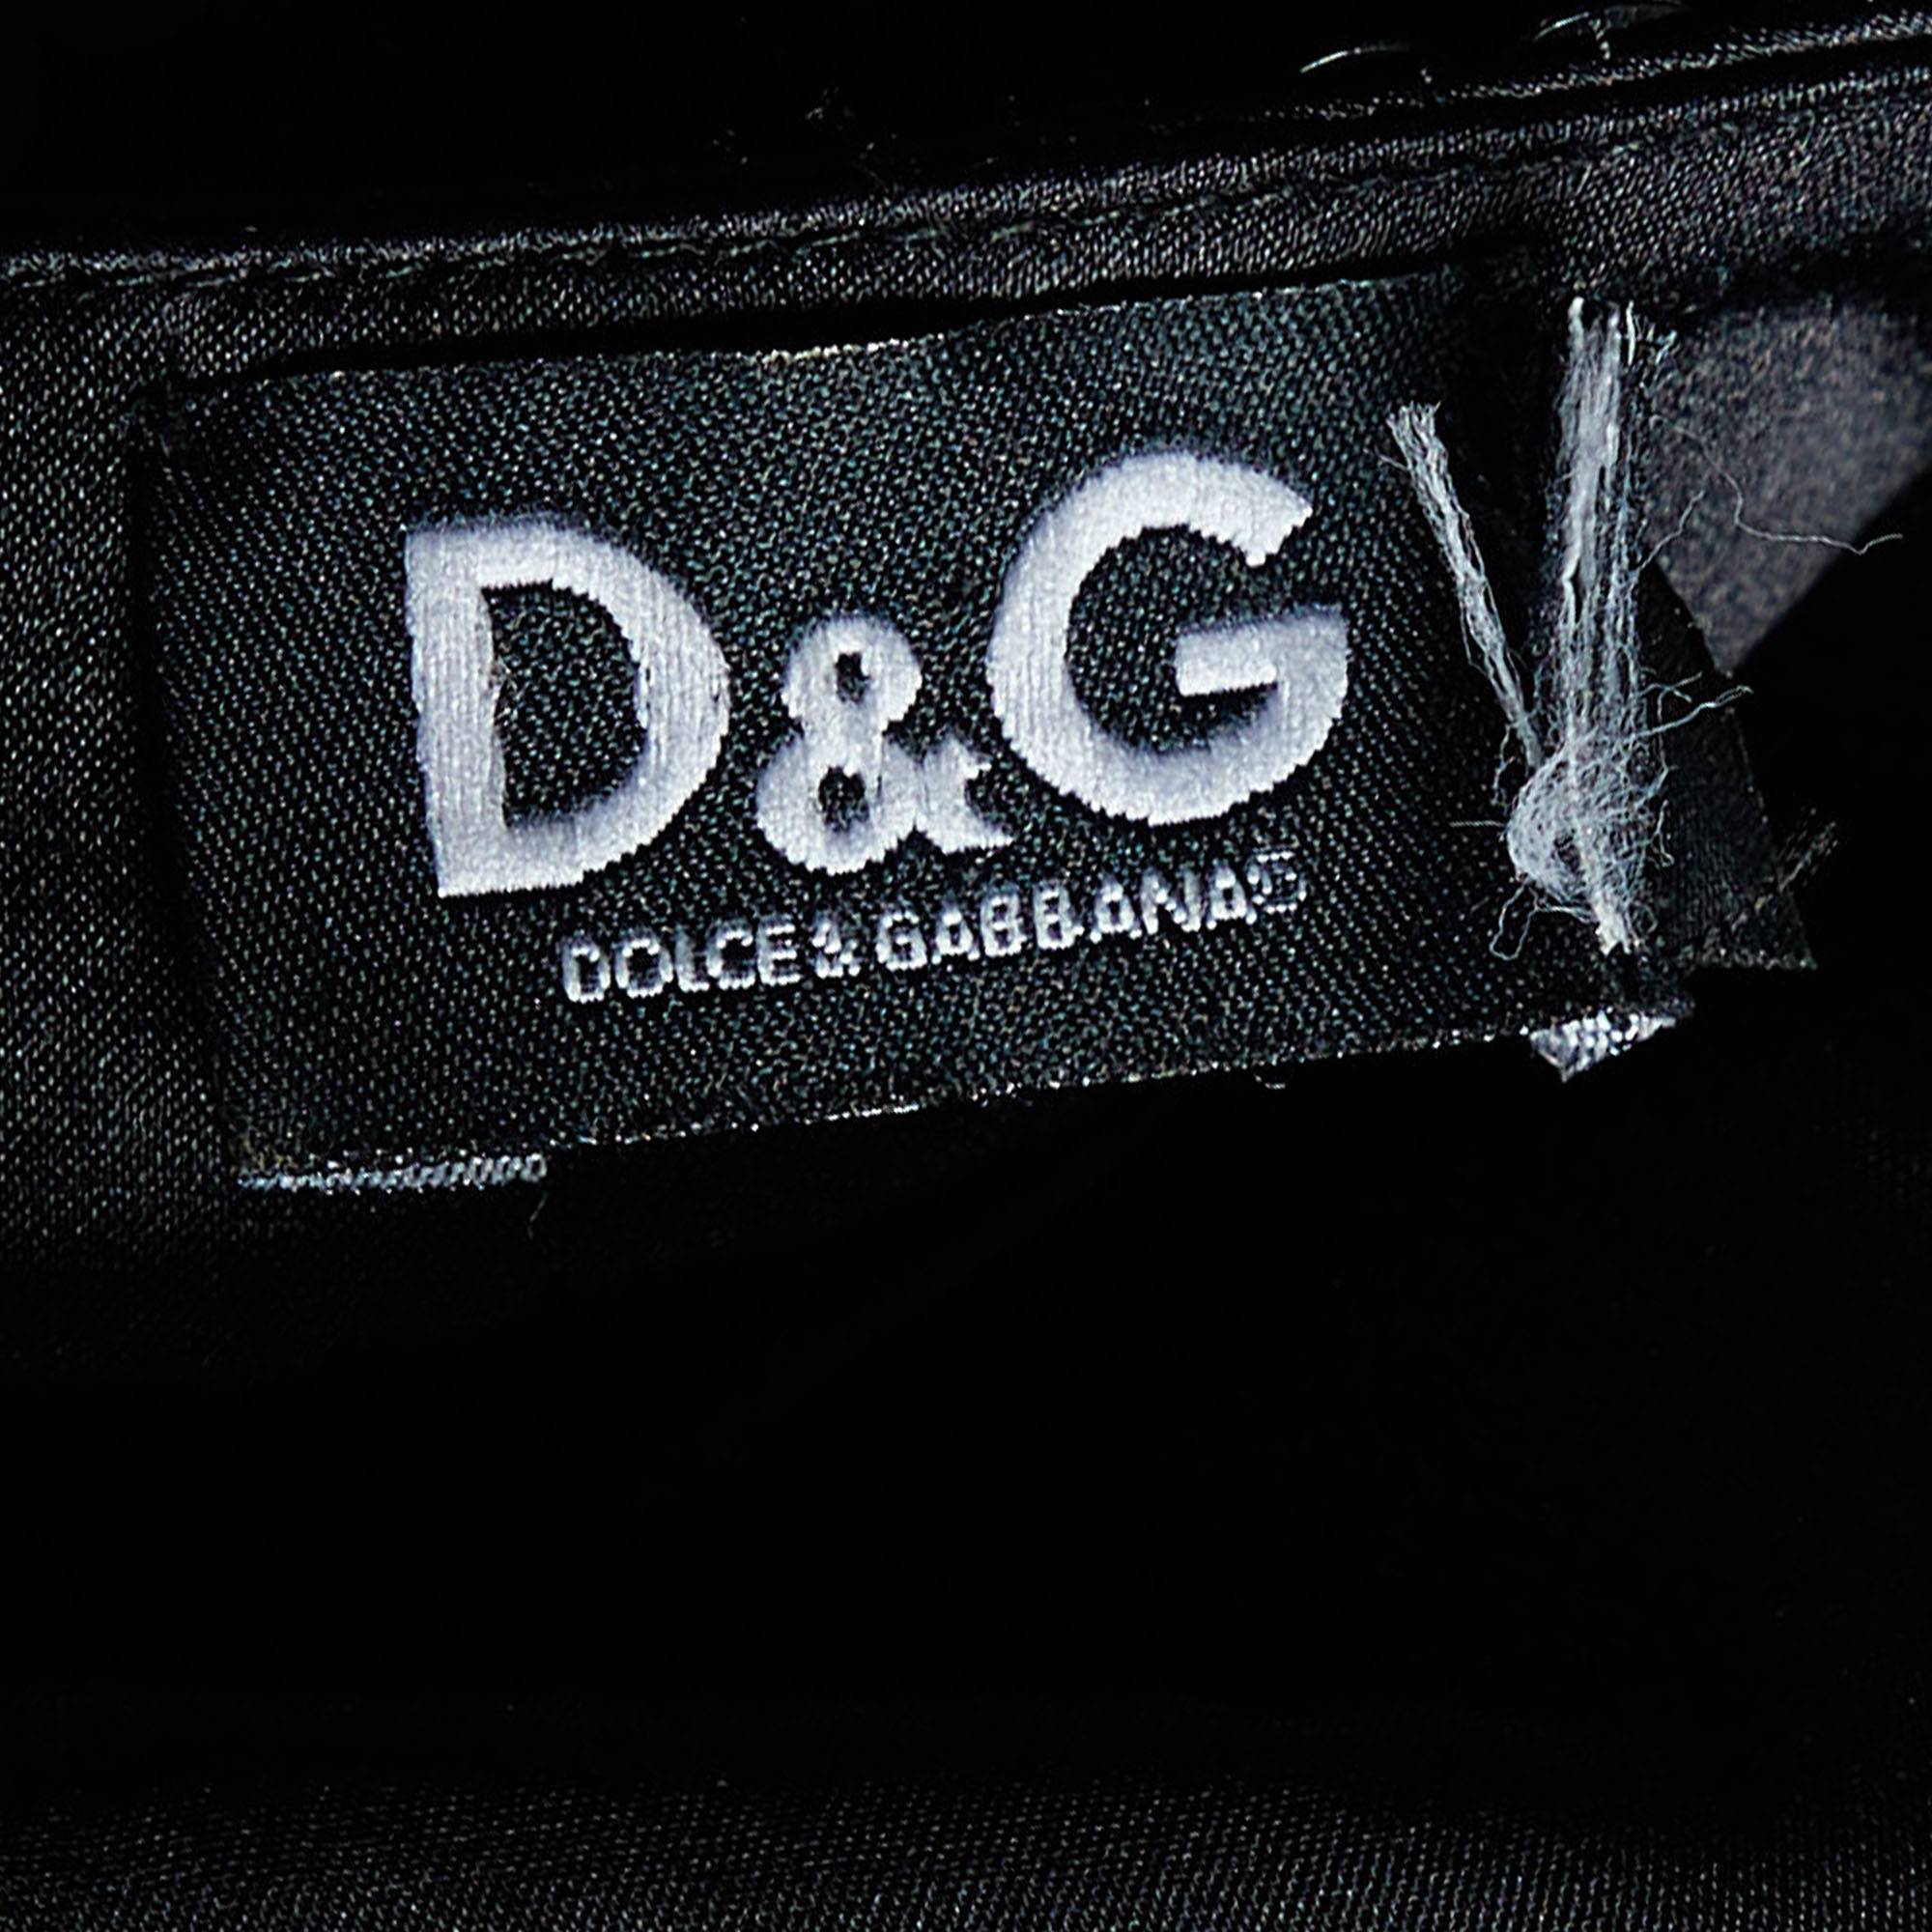 D&G Black Silk & Sequin Sheer Detail Midi Dress M